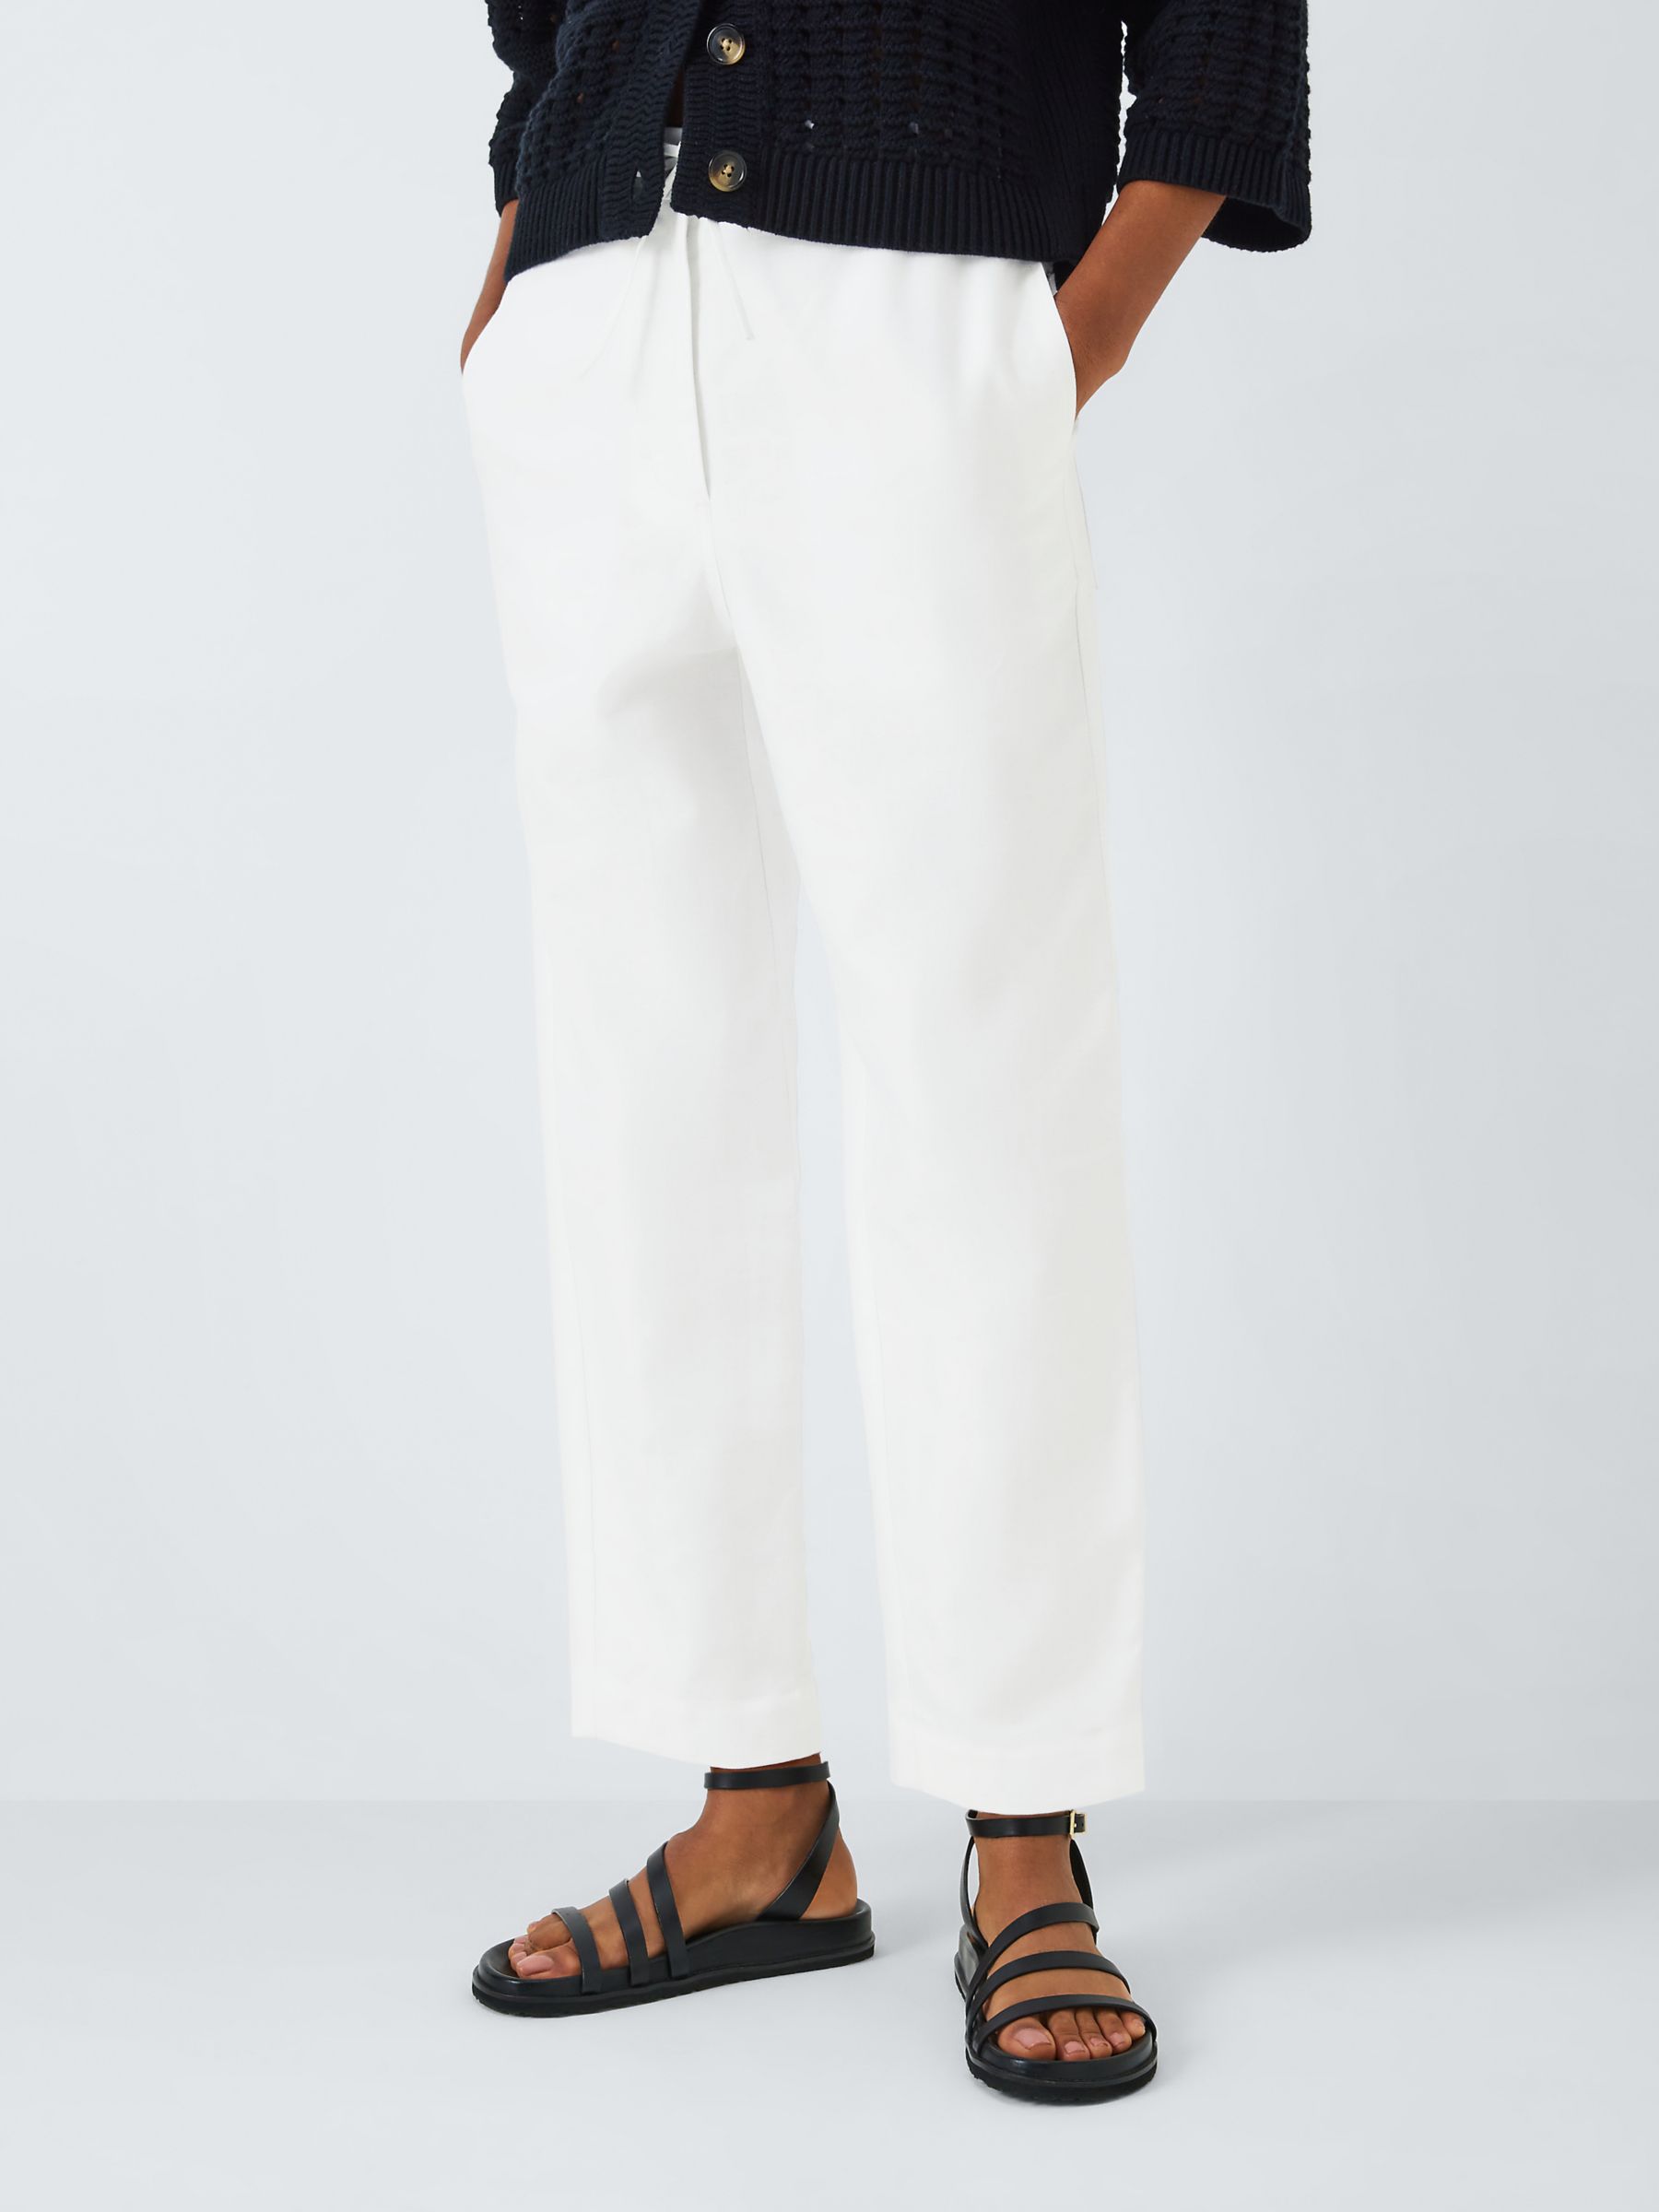 John Lewis Cotton and Linen Blend Drawstring Trousers, White, 8